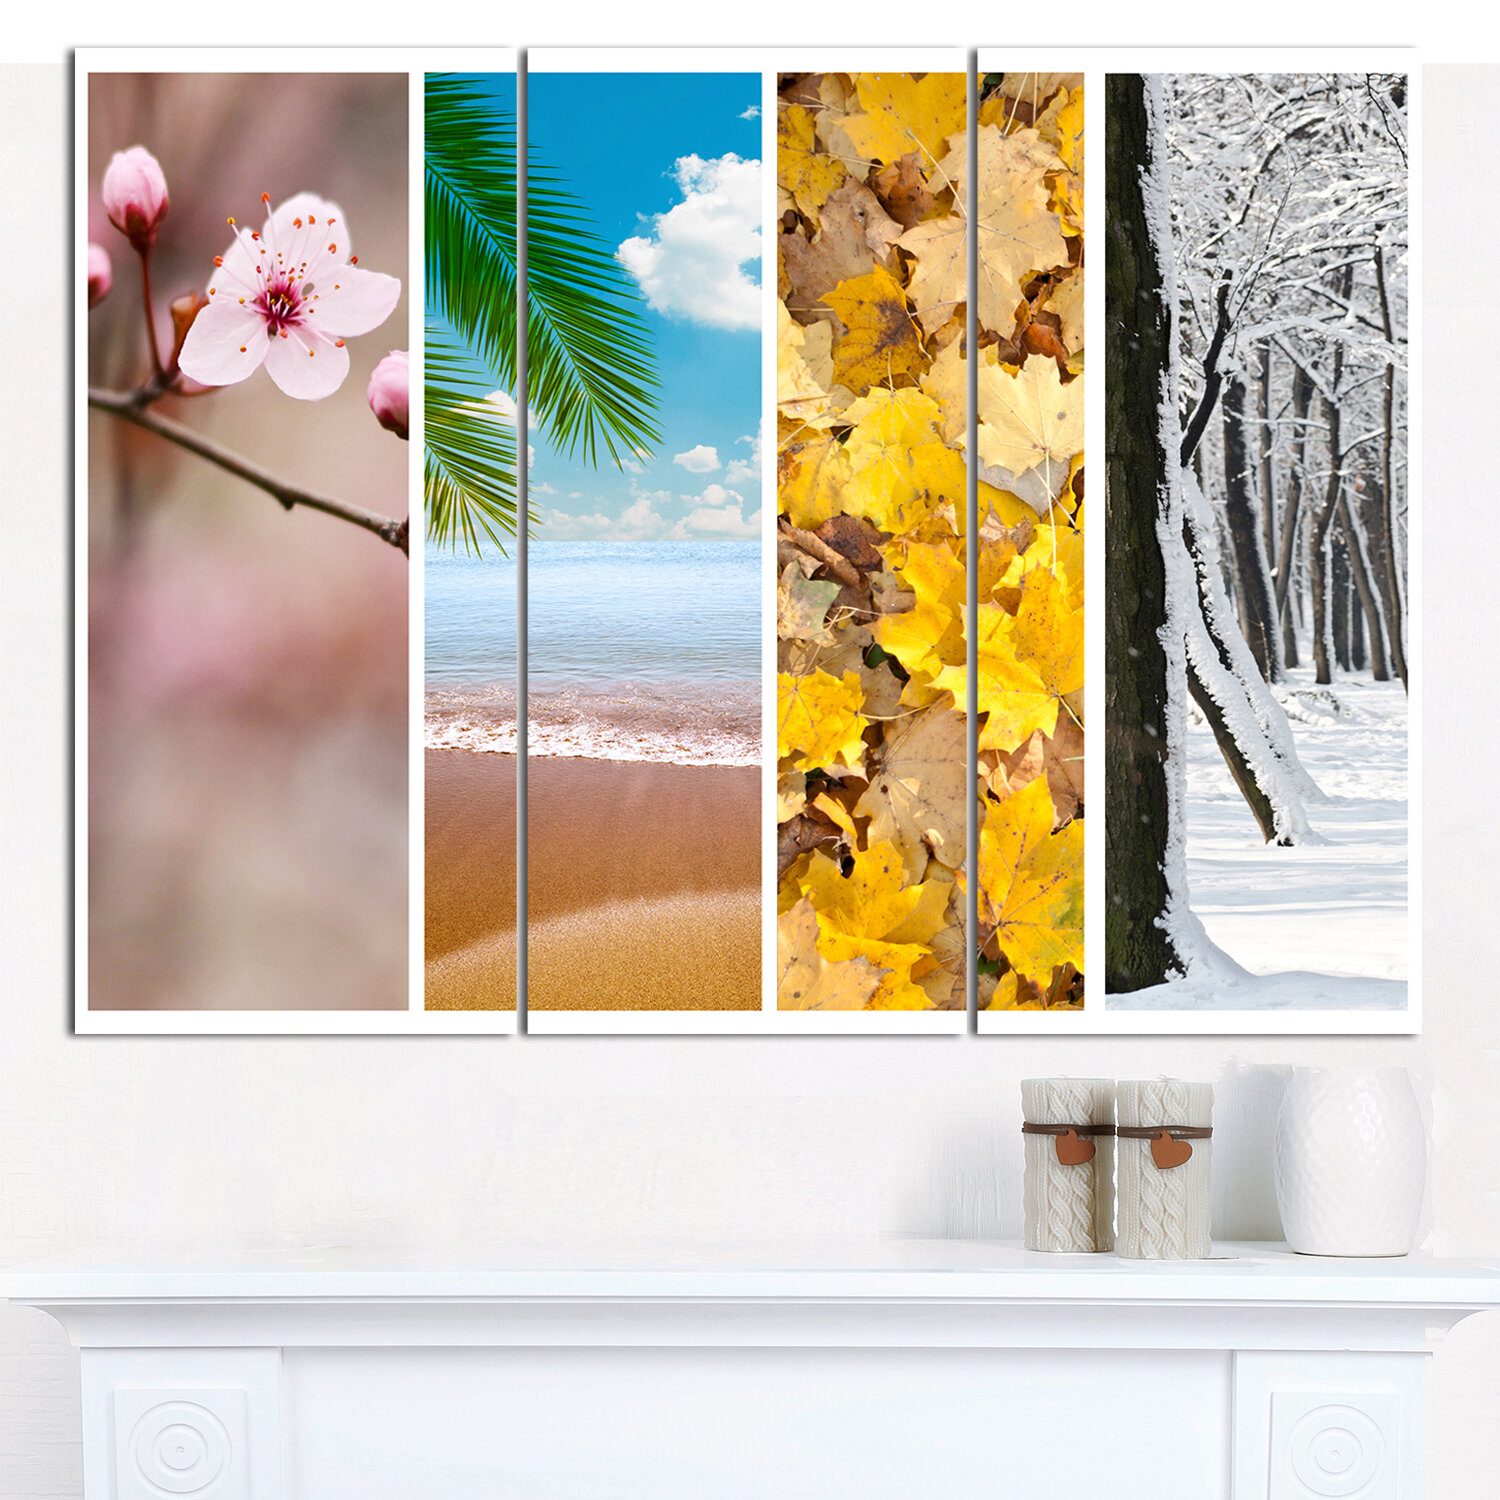 Designart Four Seasons World Collage Photographic Print Multi Piece Image On Canvas Wayfair